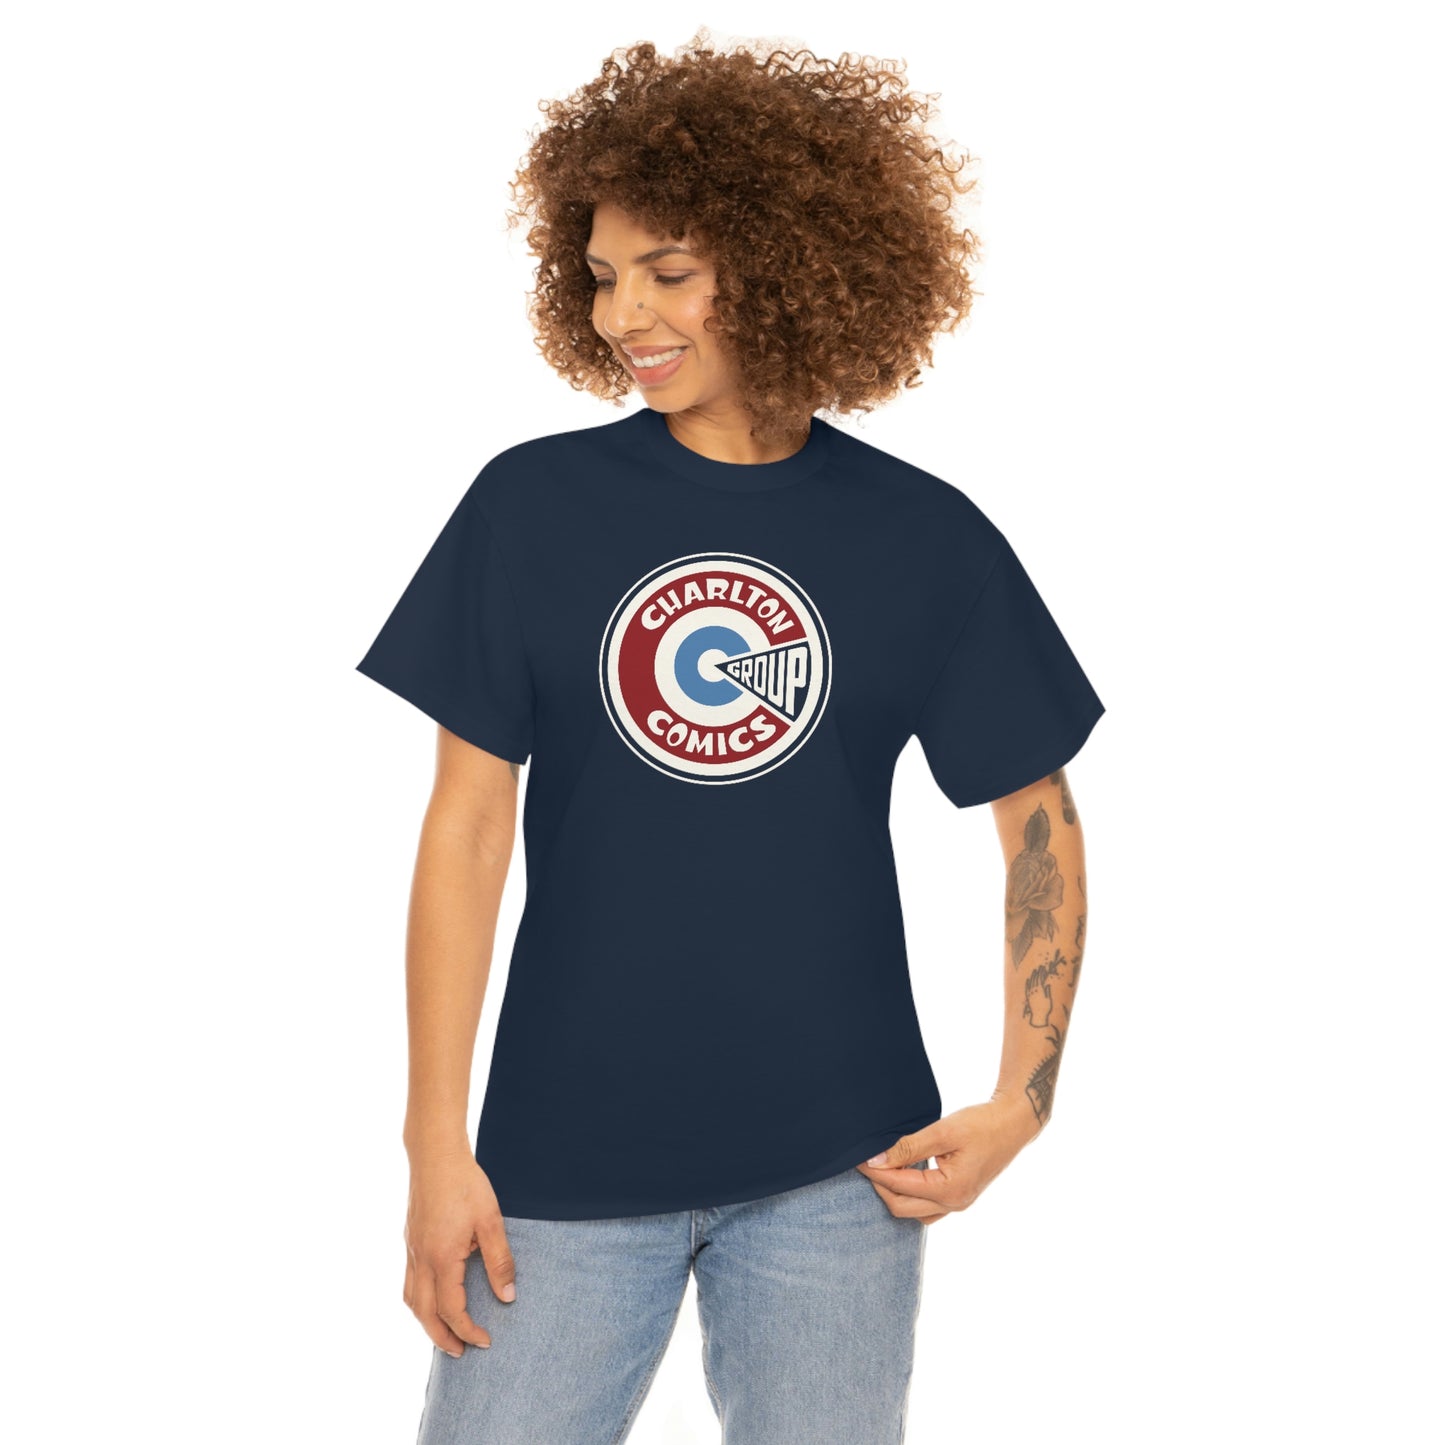 Charlton Comics Group T-Shirt